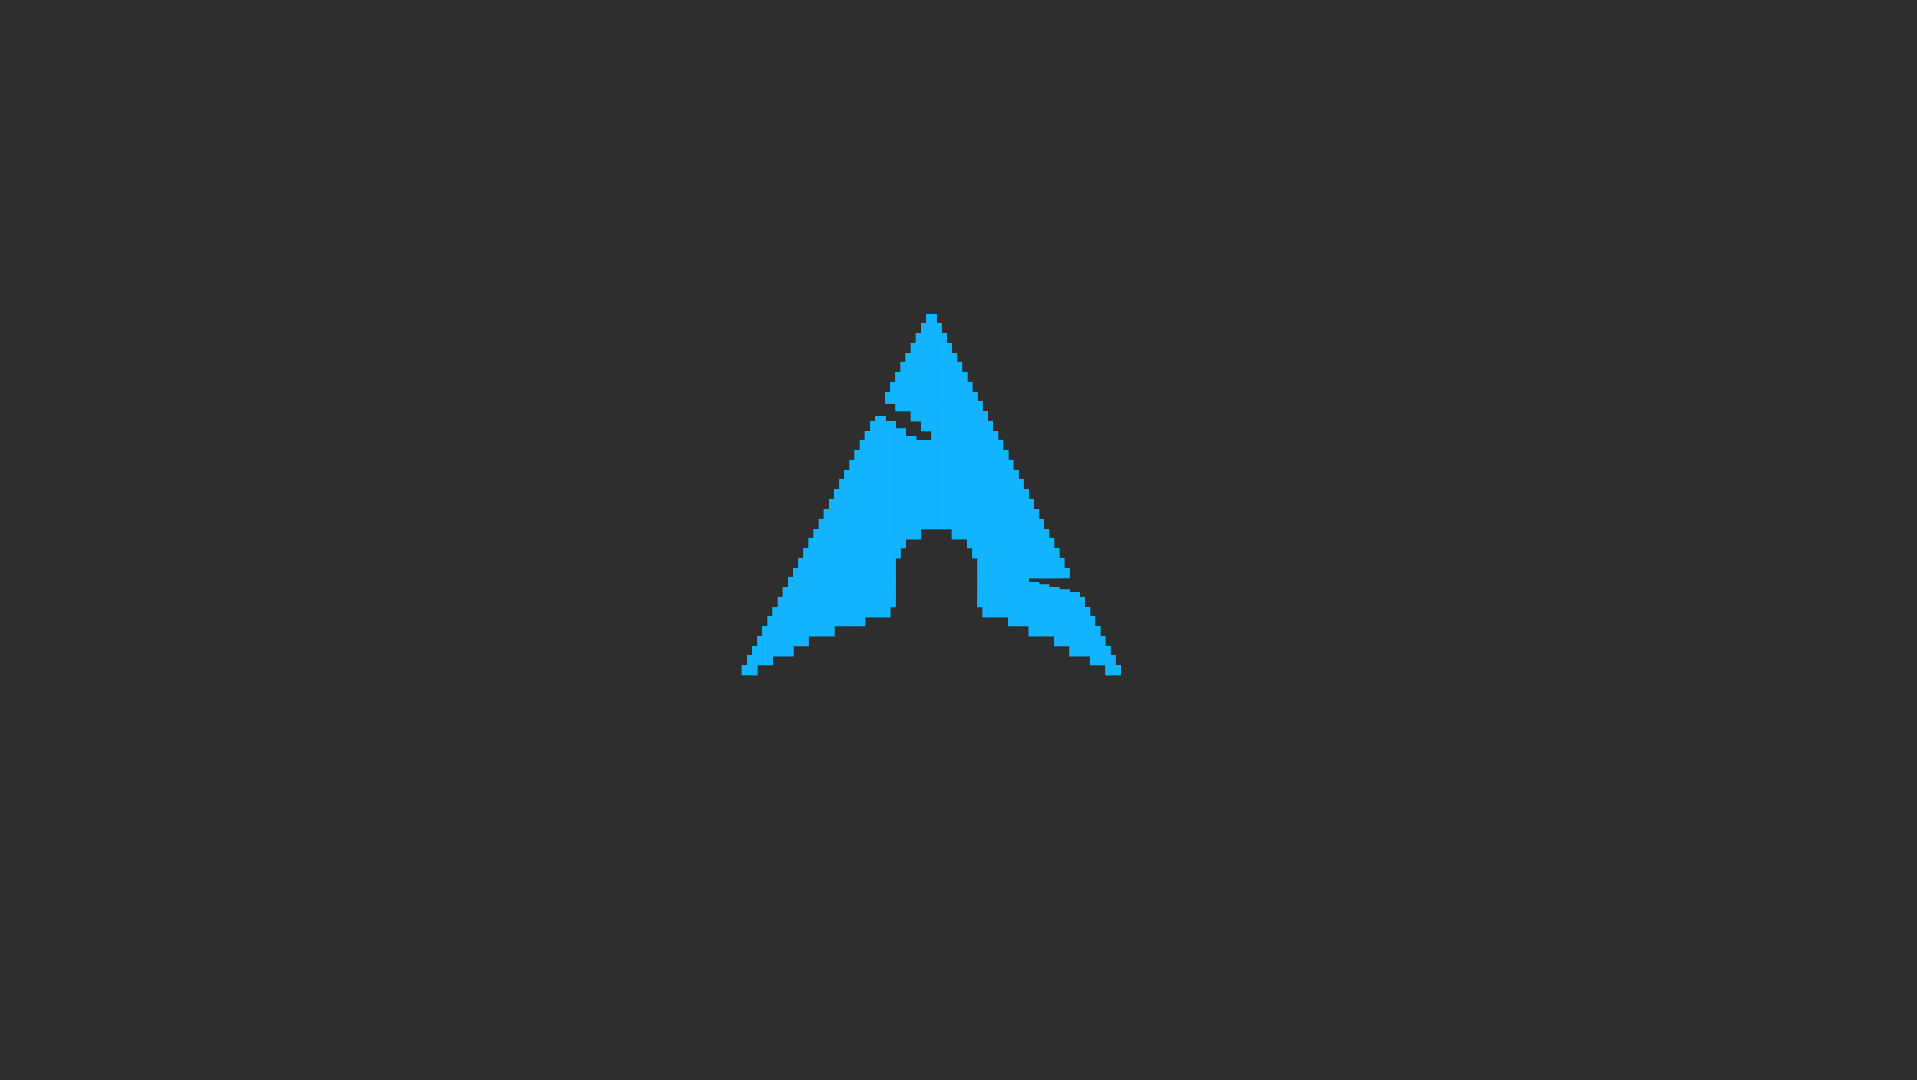 General 1917x1080 Linux Arch Linux minimalism digital art text simple background logo arrow (design) blue